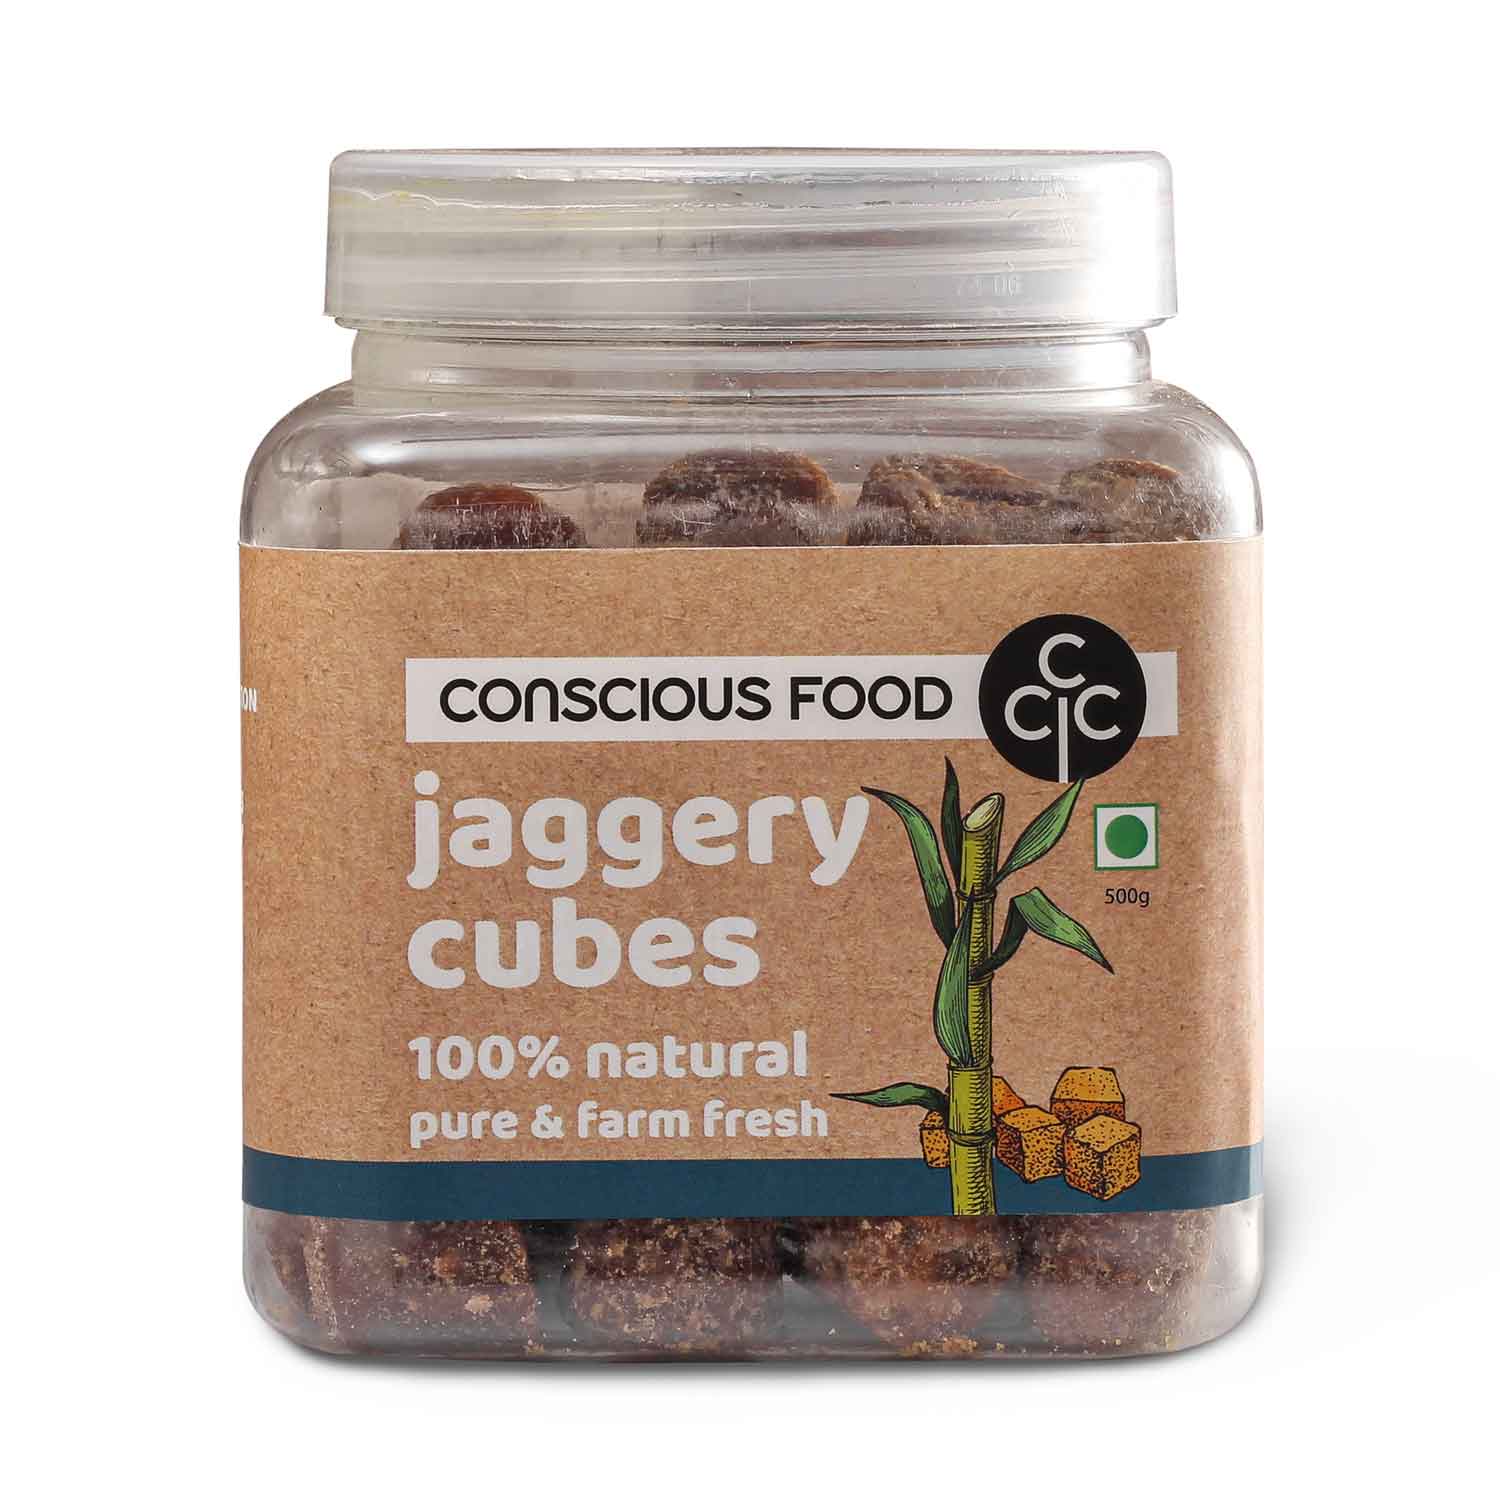 Product: Conscious Food Garam Masala 100g